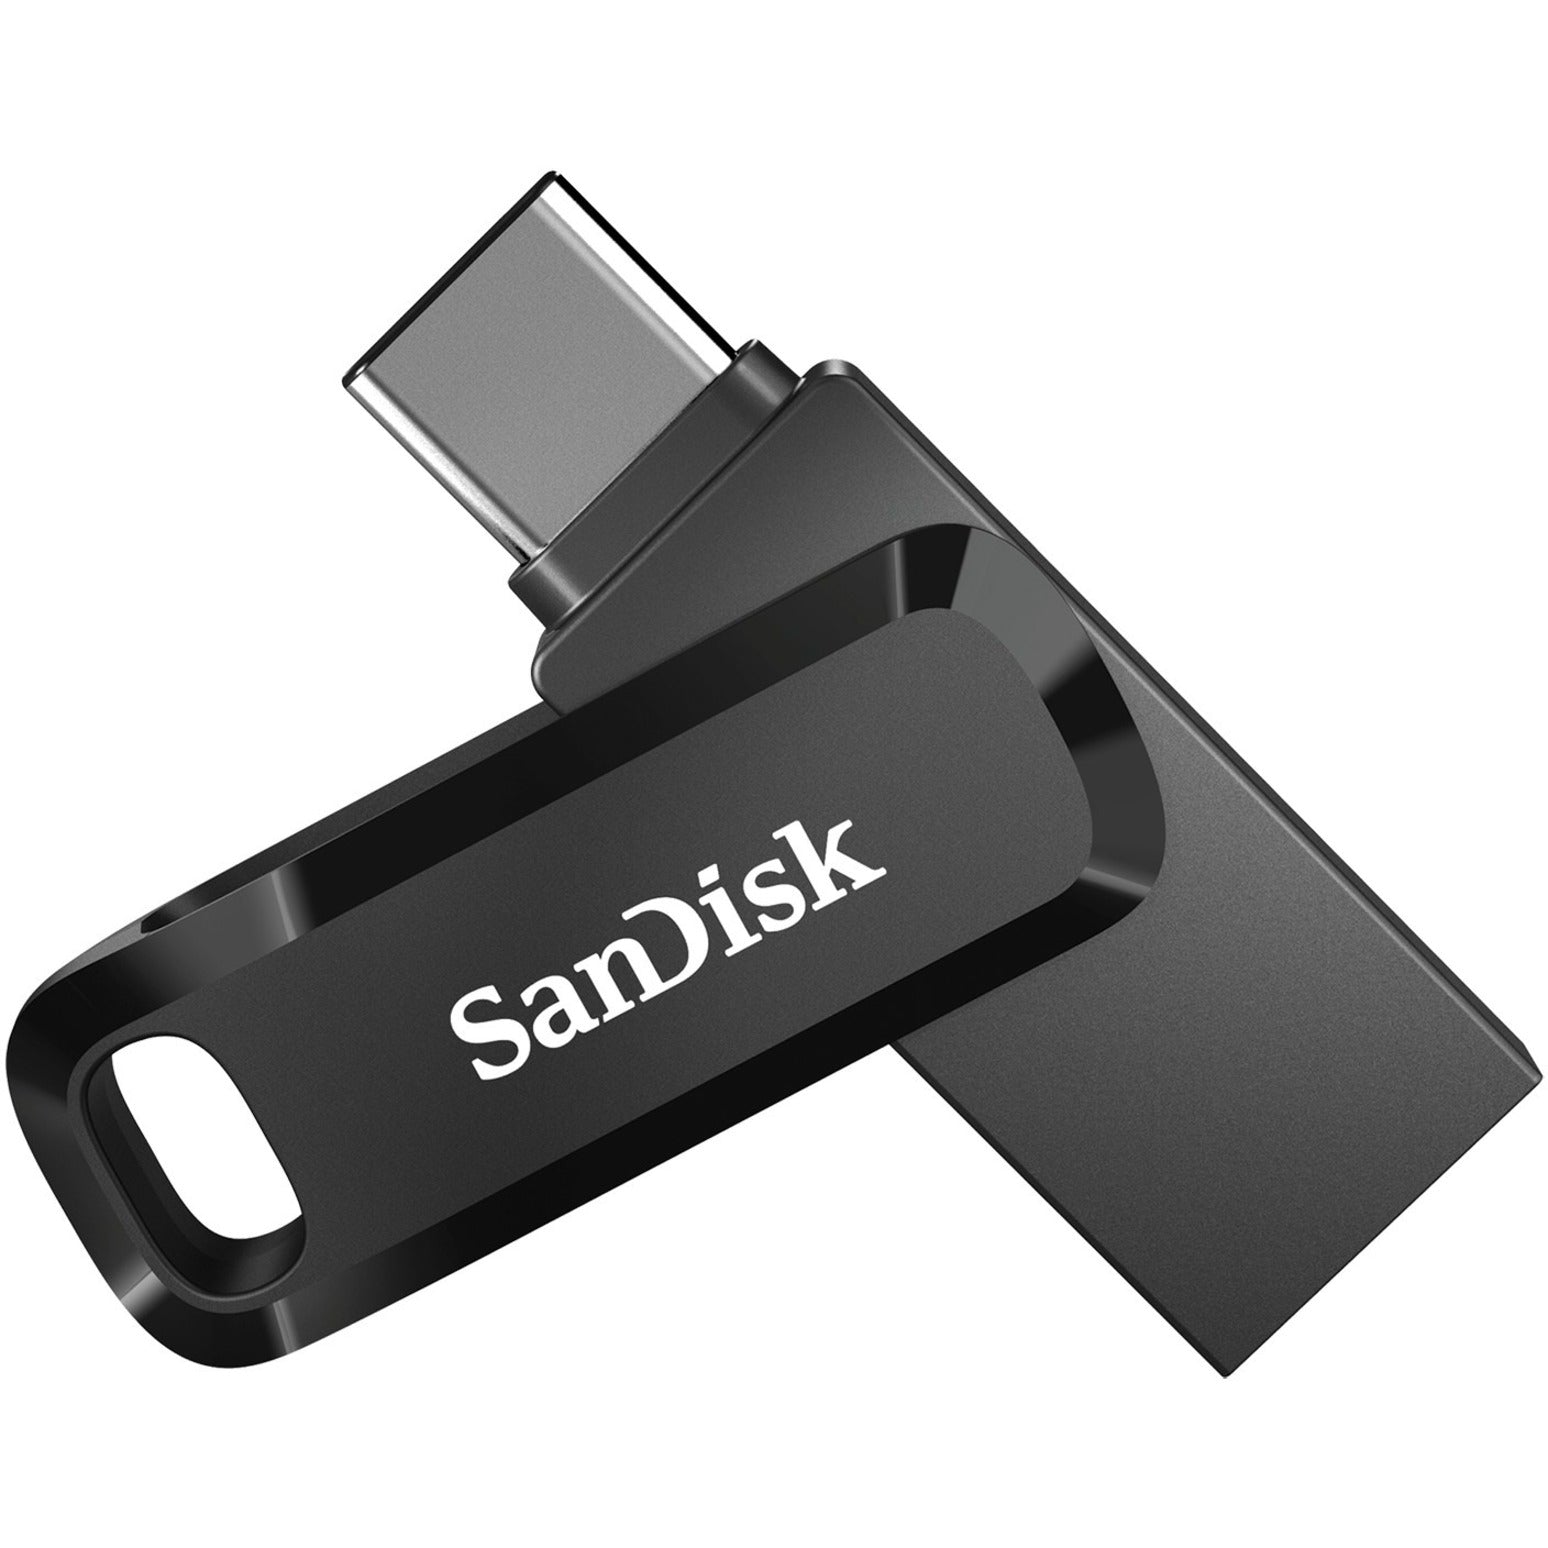 SanDisk SDDDC3-256G-A46 Ultra Dual Drive Go USB Type-C 256GB, Auto Backup, 150 MB/s